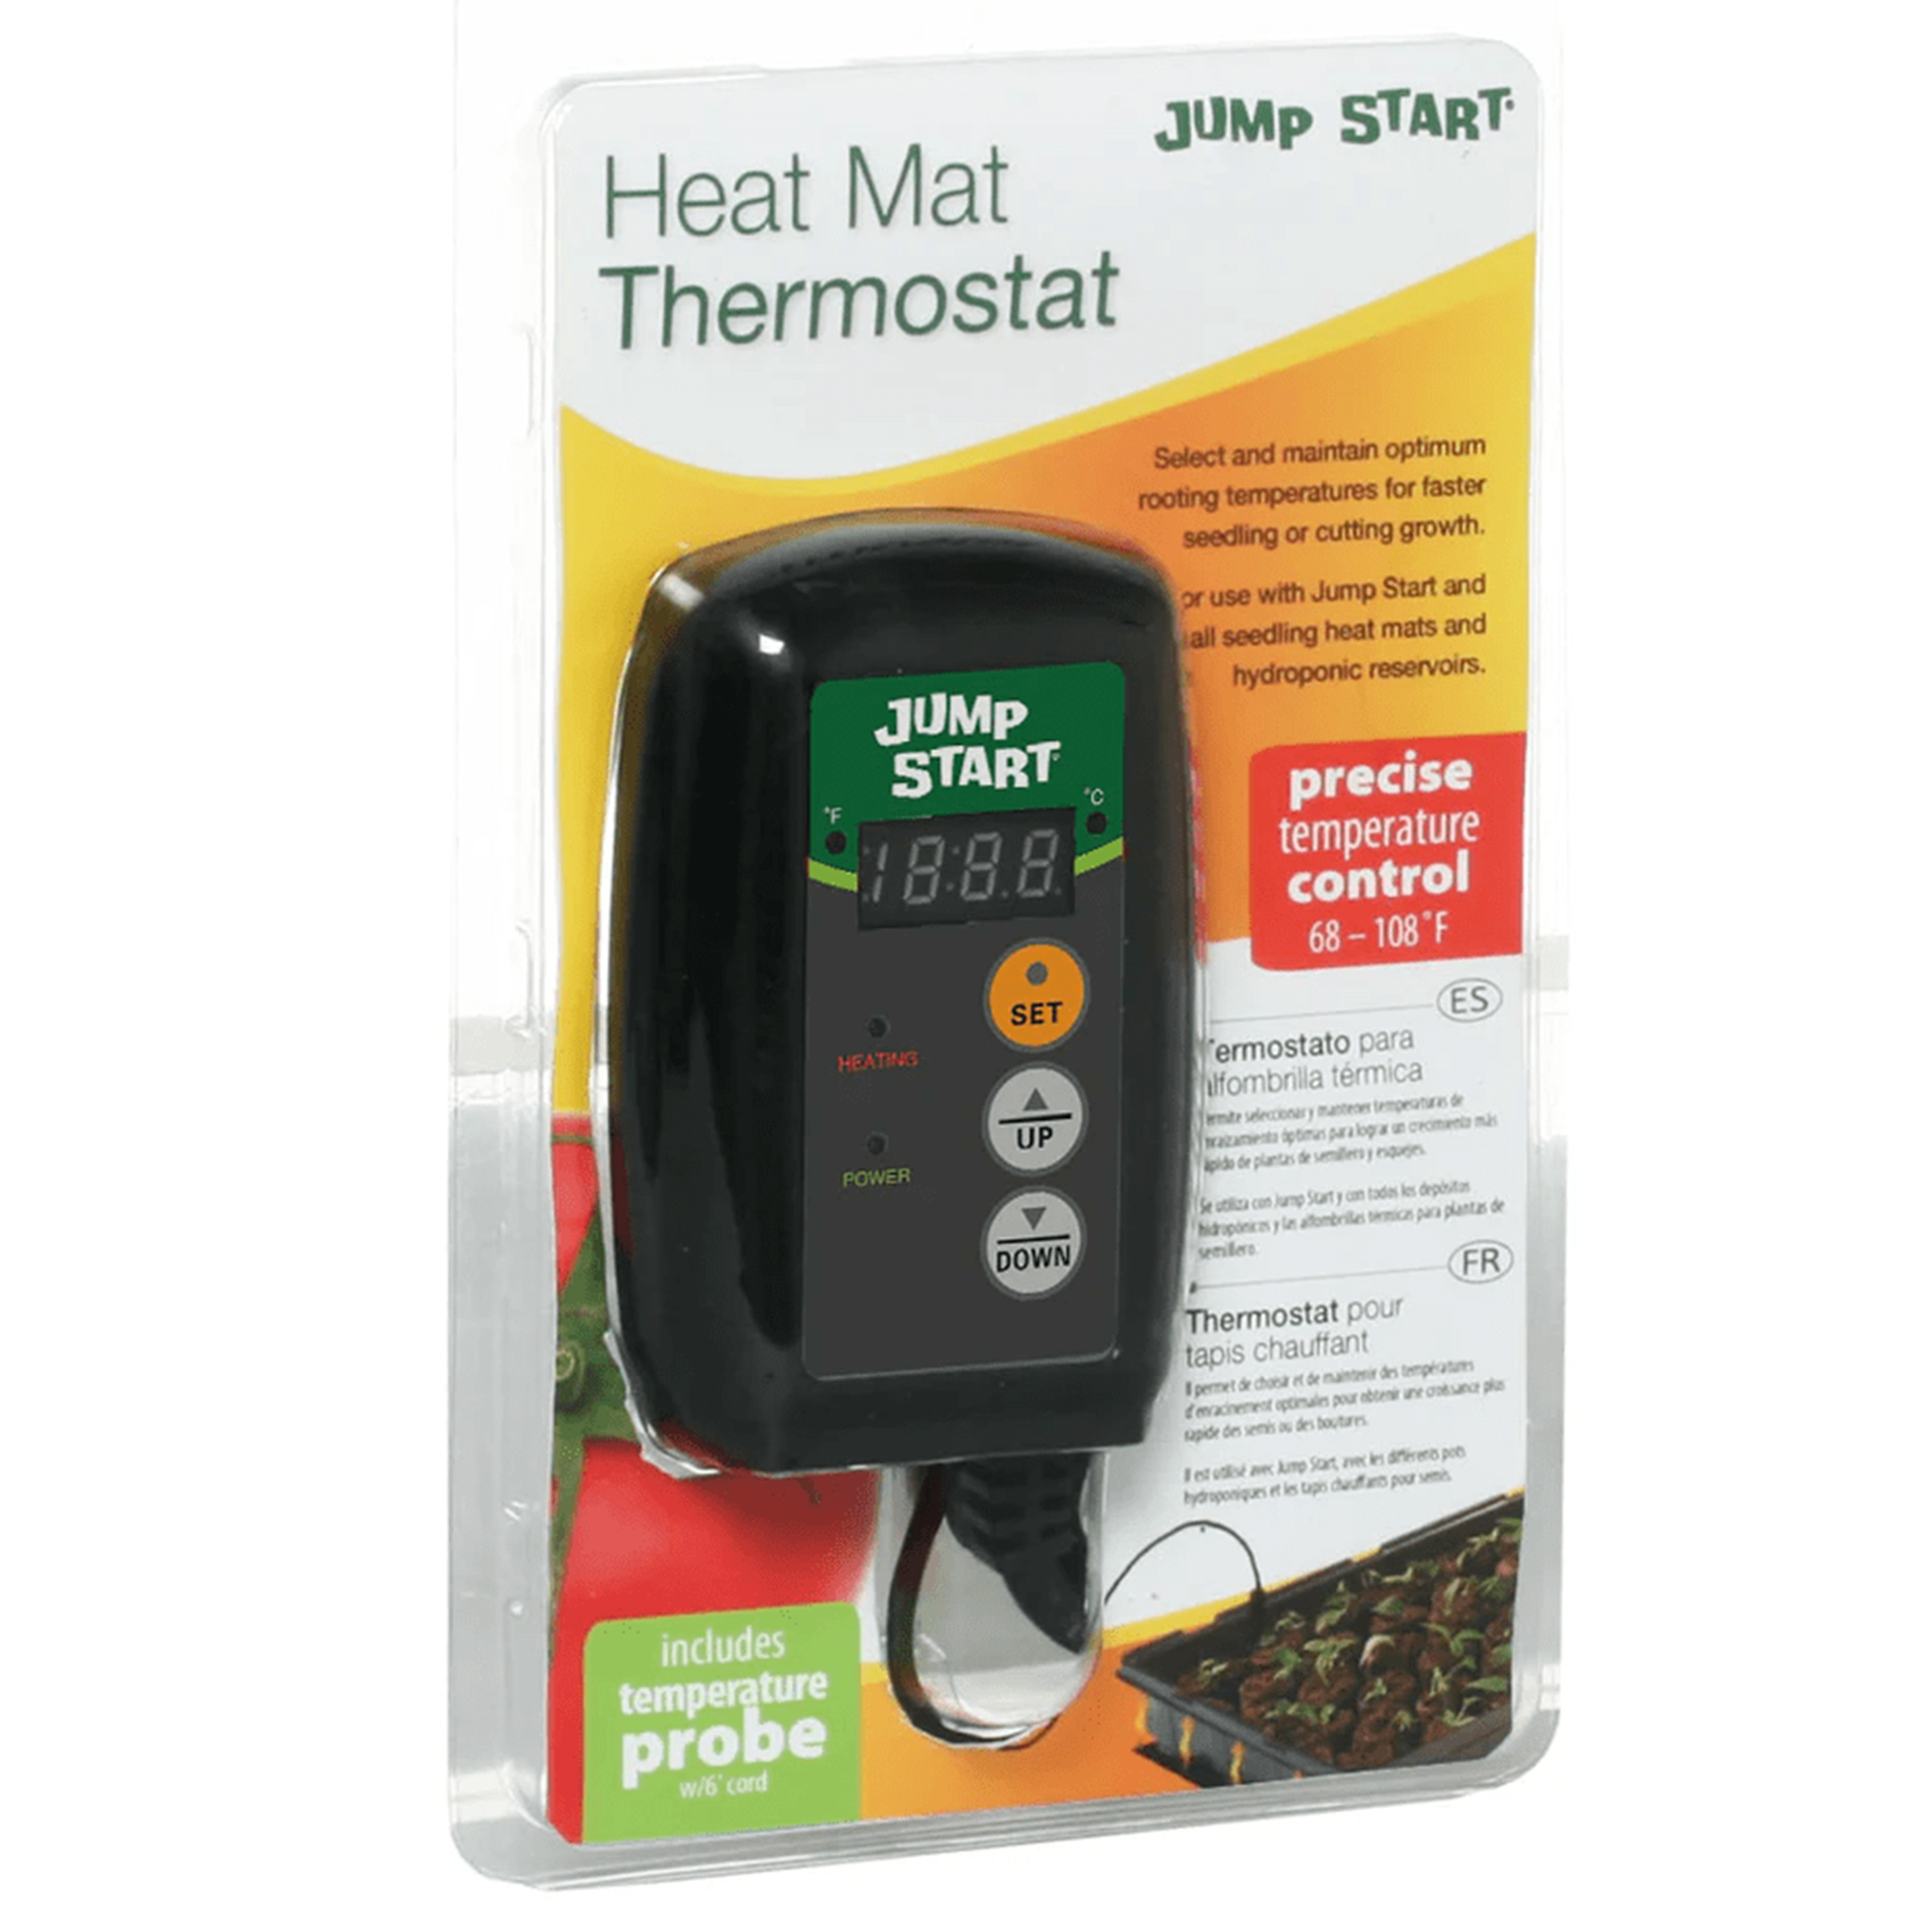 Heat Mat Thermostat Contoller